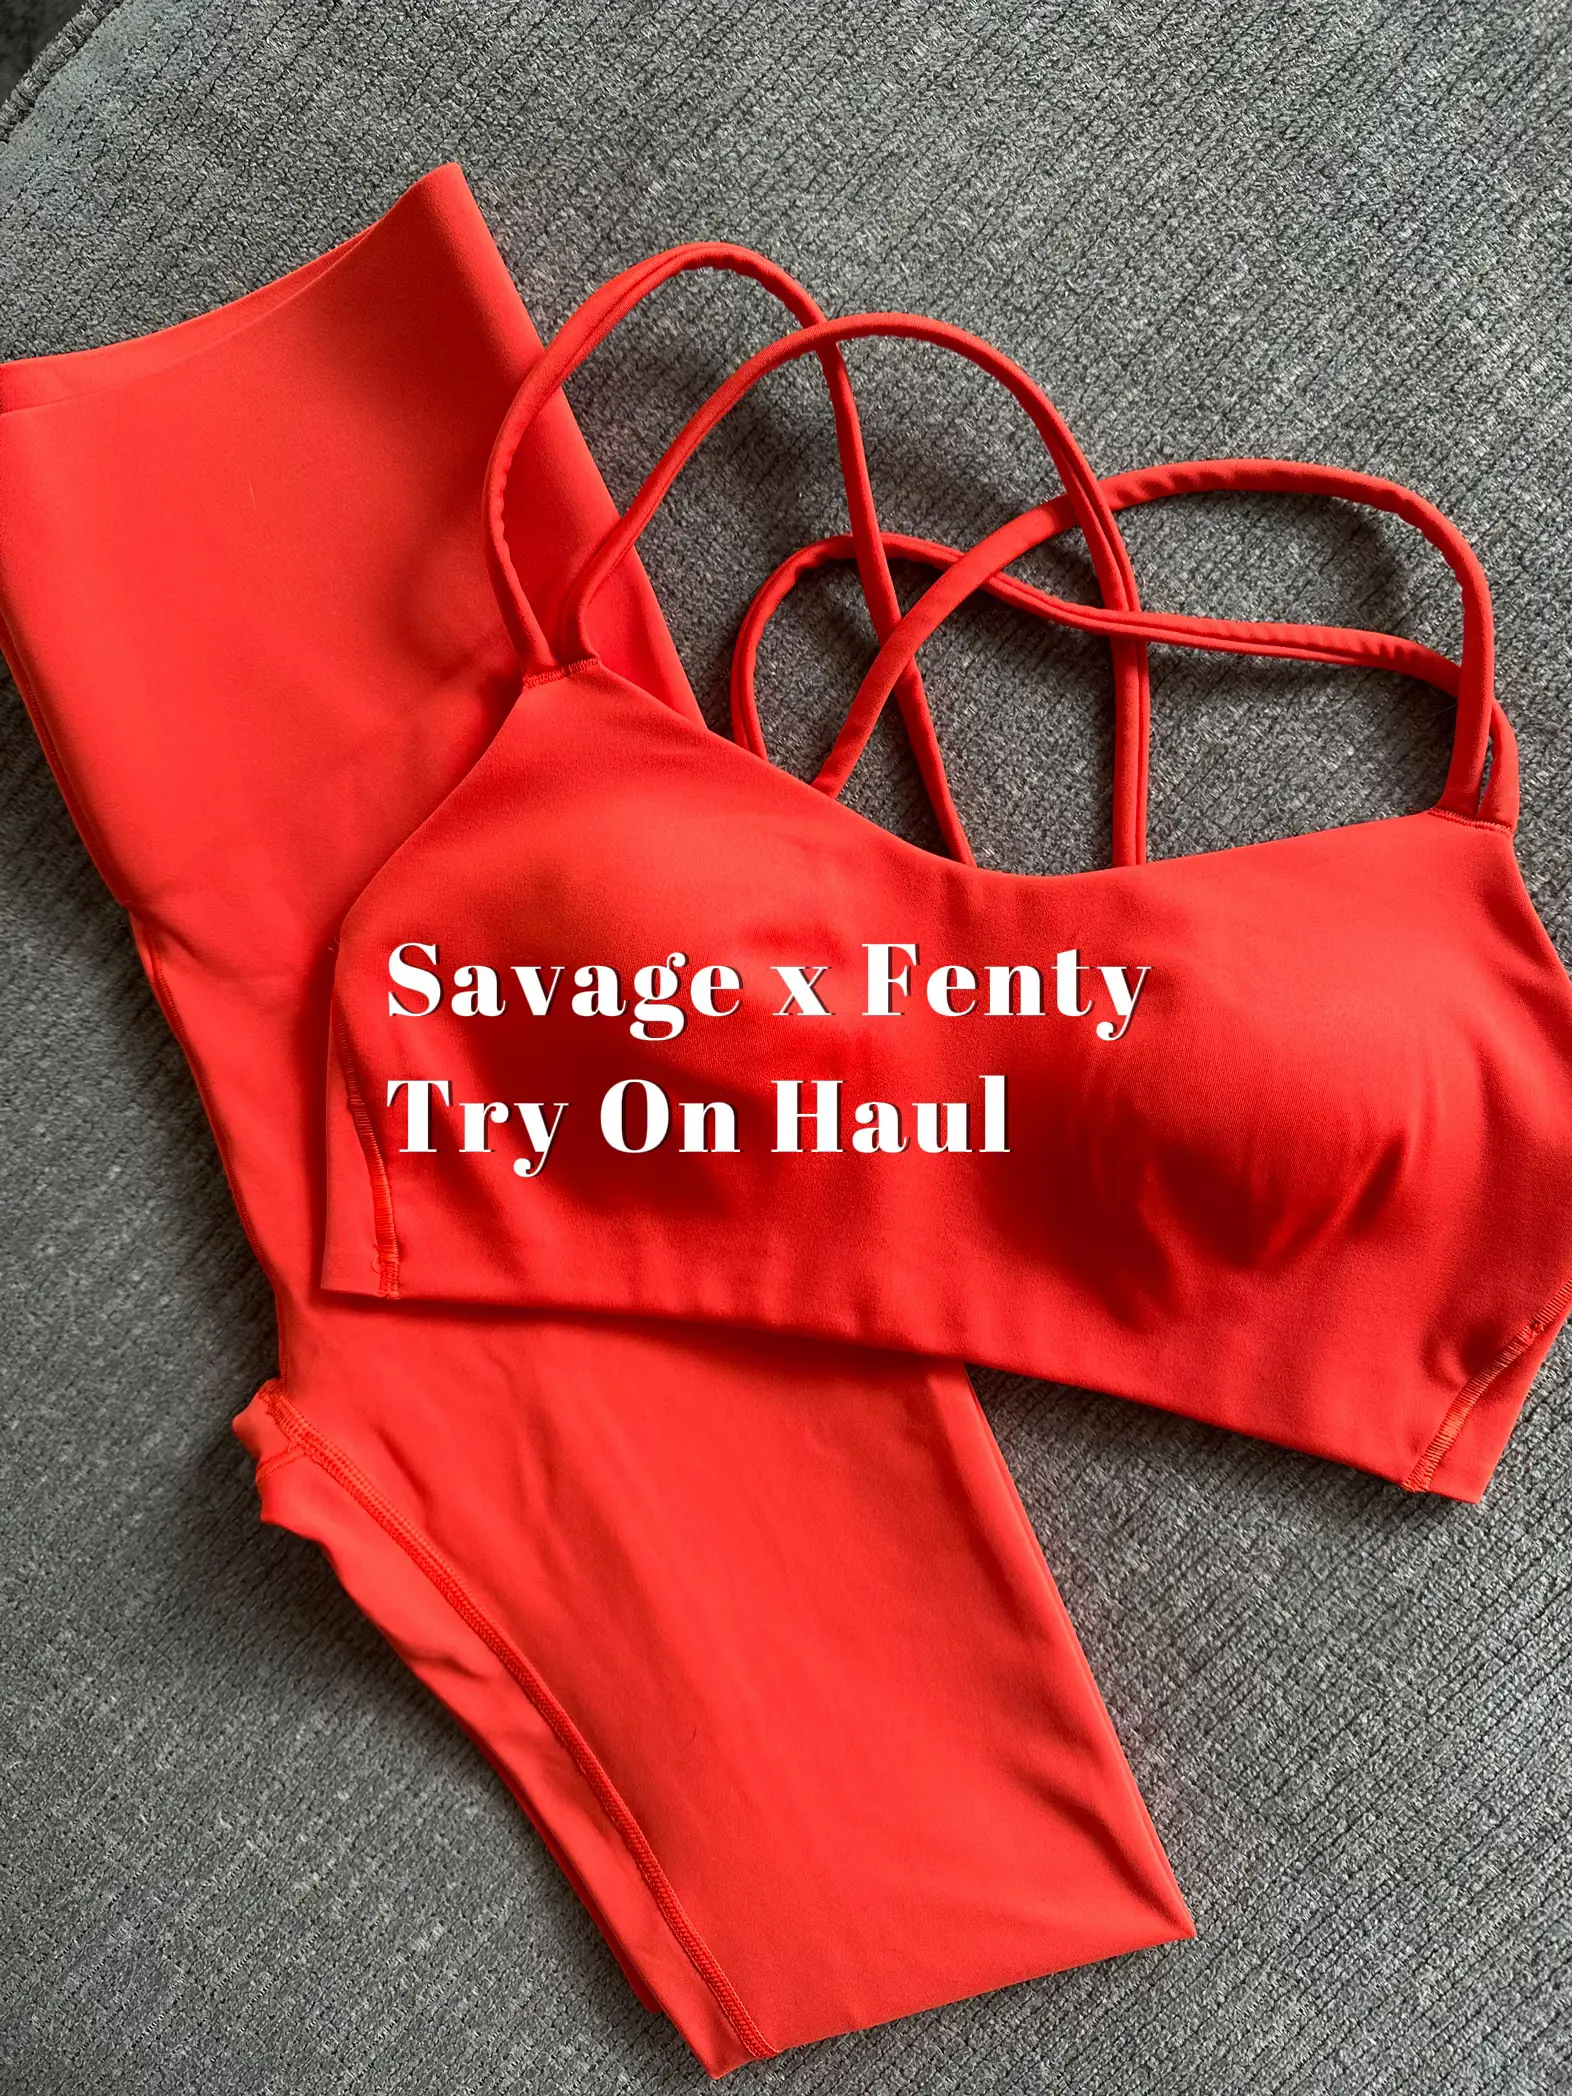 Savage X Fenty - Even when we mellow we fly. #SavageXFenty